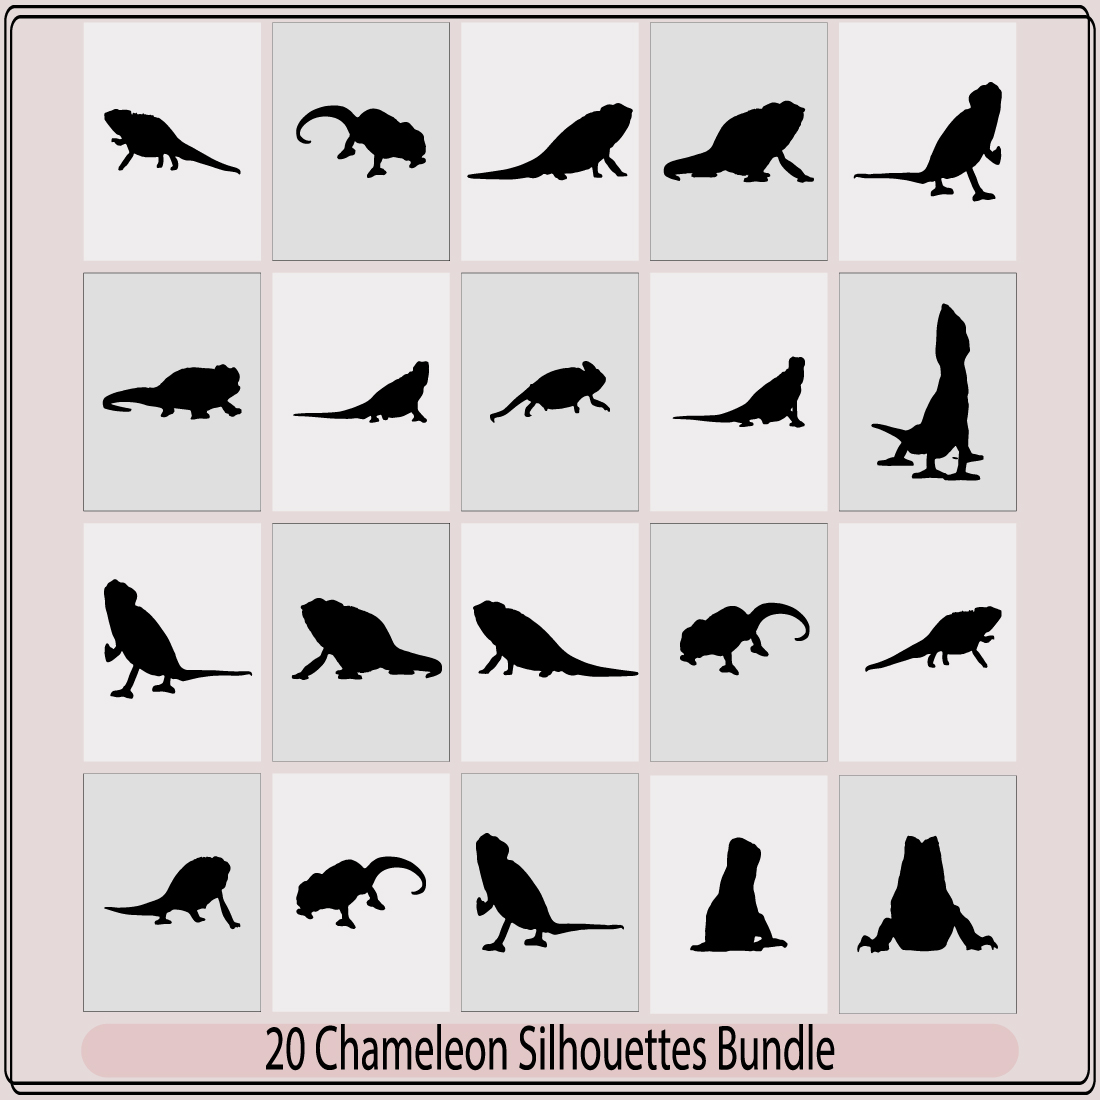 silhouette of a chameleon,Chameleon graphic icon,Chameleon lizard reptile black silhouette,Vector illustration of a chameleon silhouette, cover image.